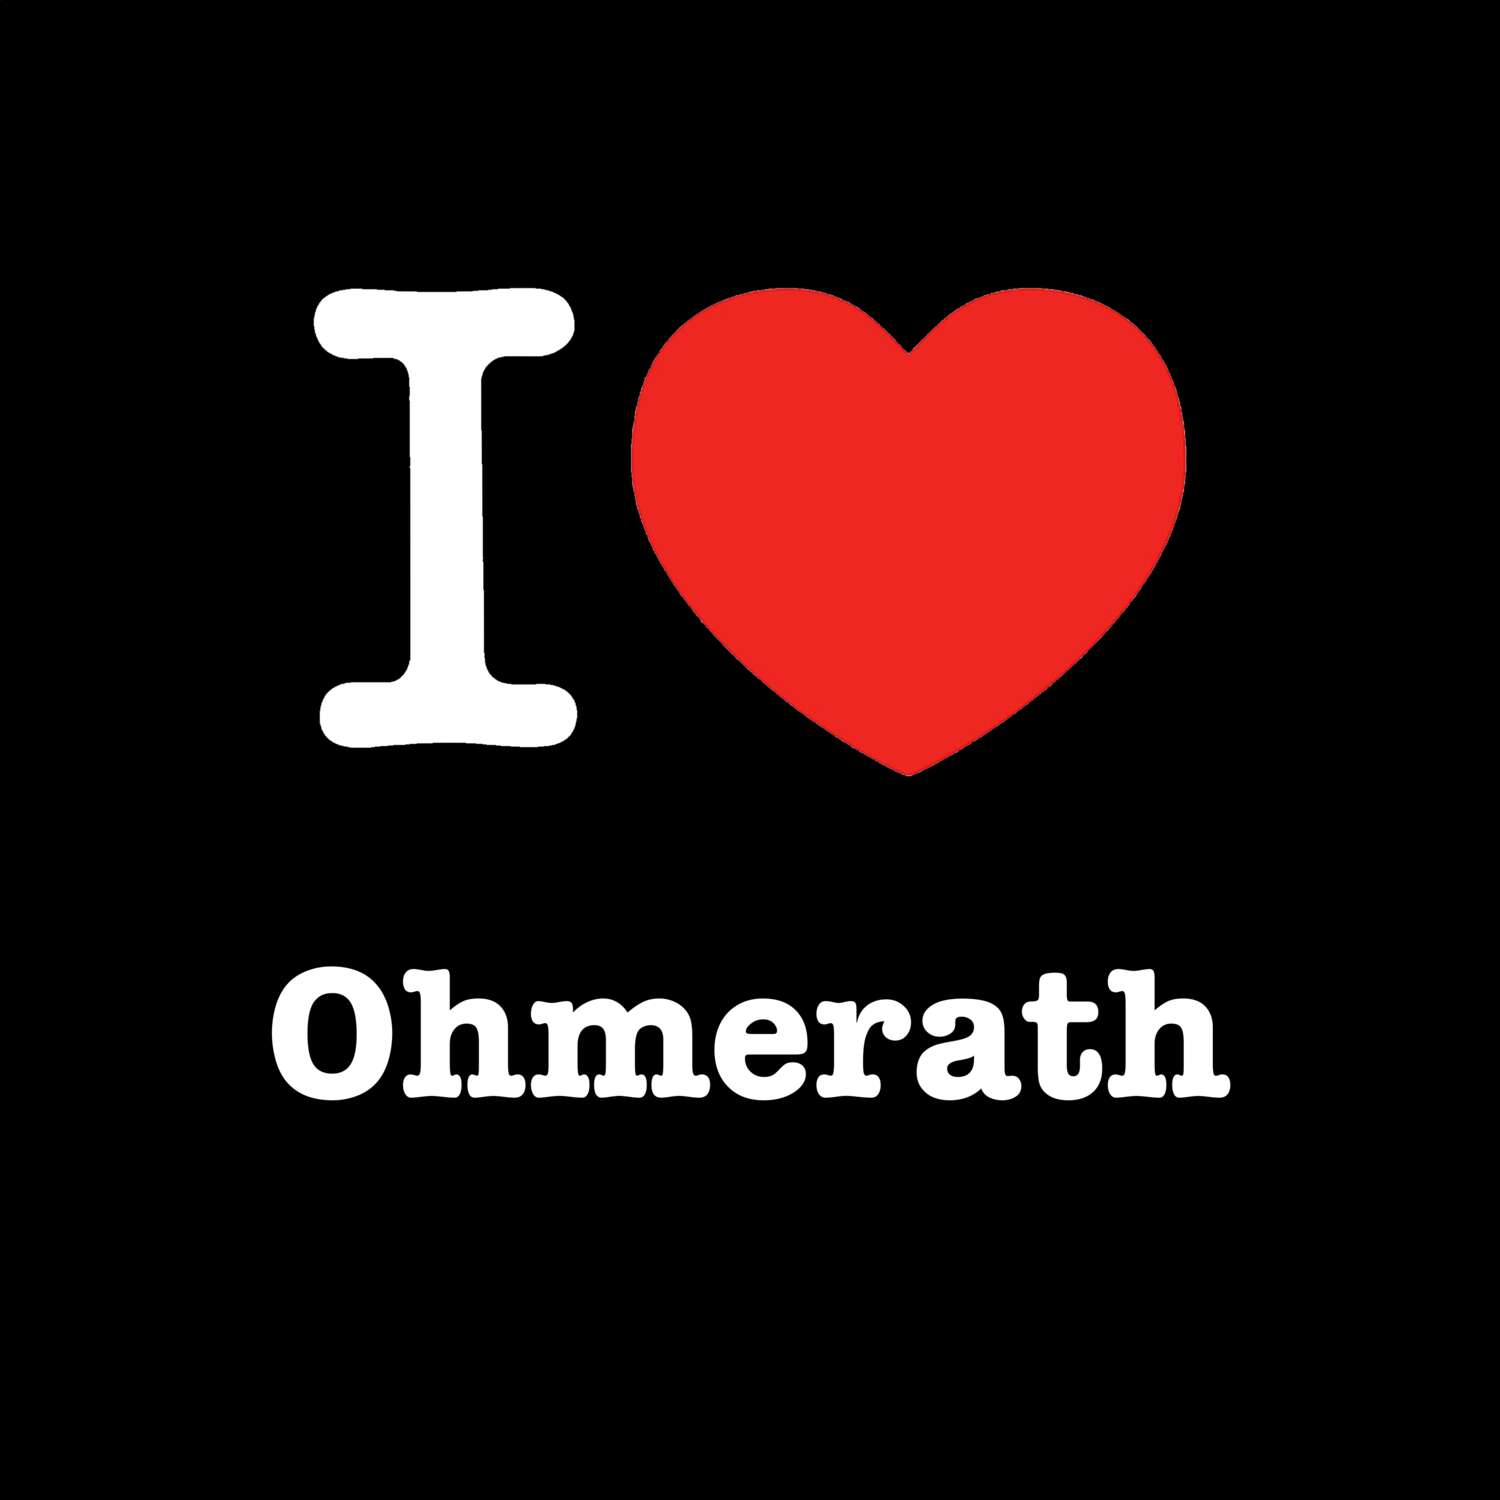 Ohmerath T-Shirt »I love«